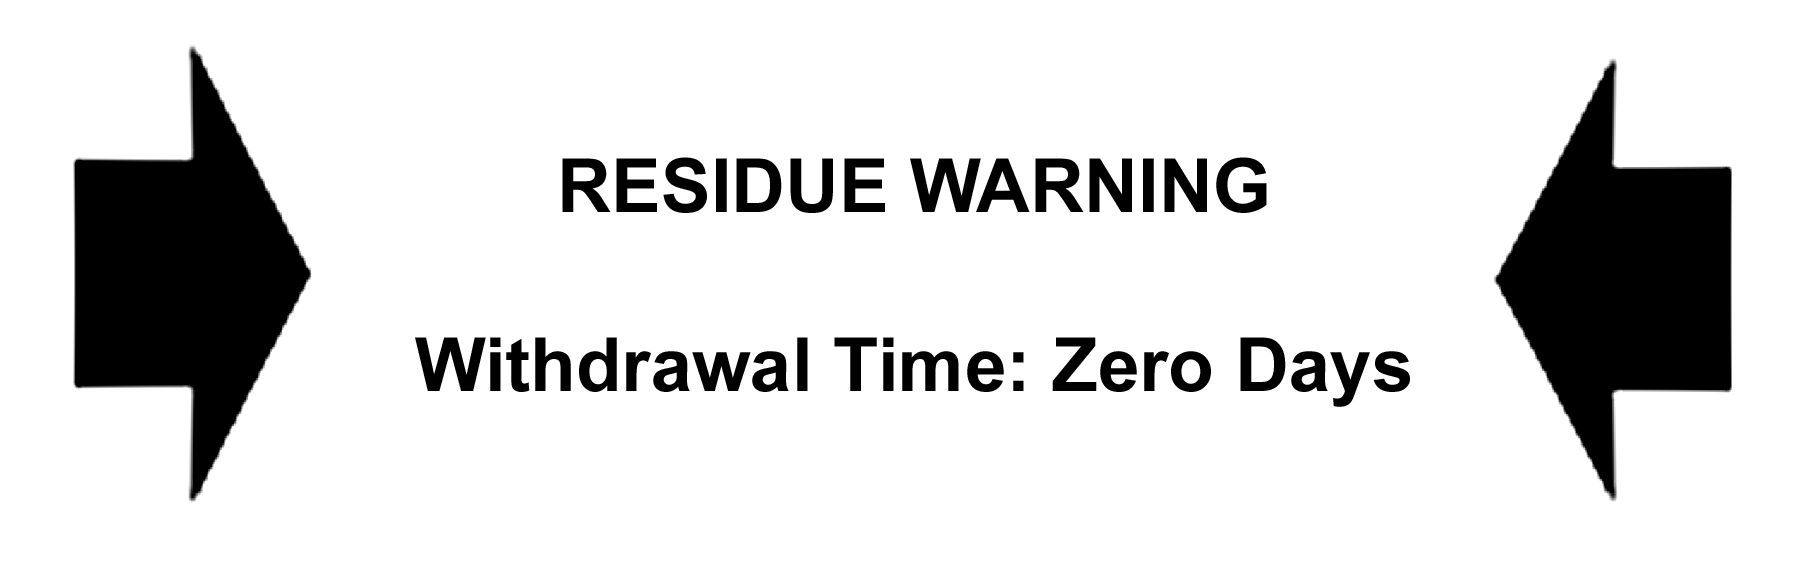 Residue warning